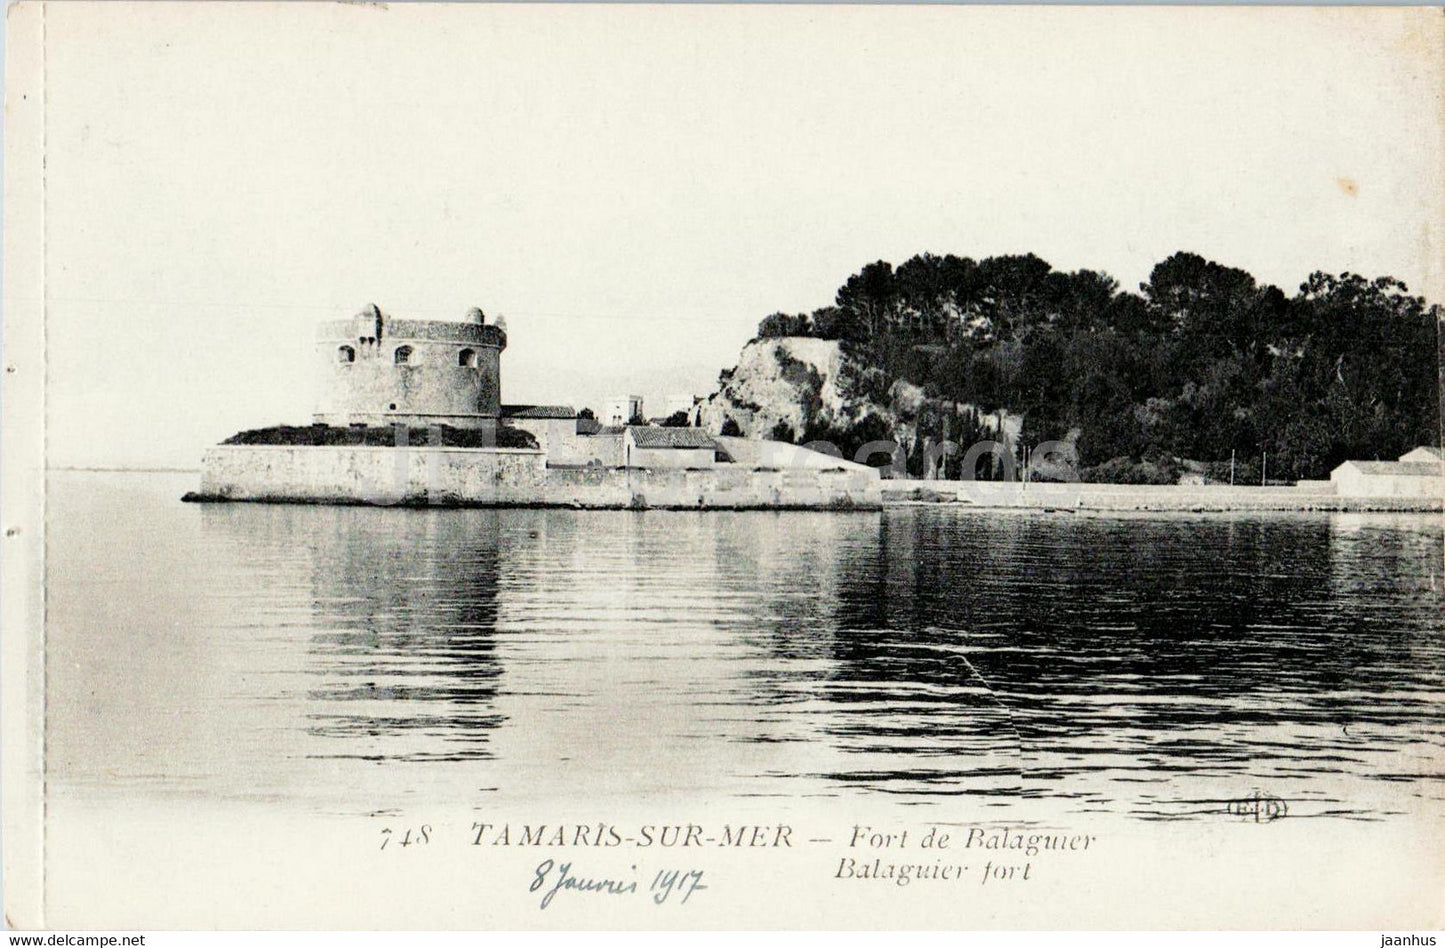 Tamaris Sur Mer - Fort de Balaguier - 748 - old postcard - France - unused - JH Postcards